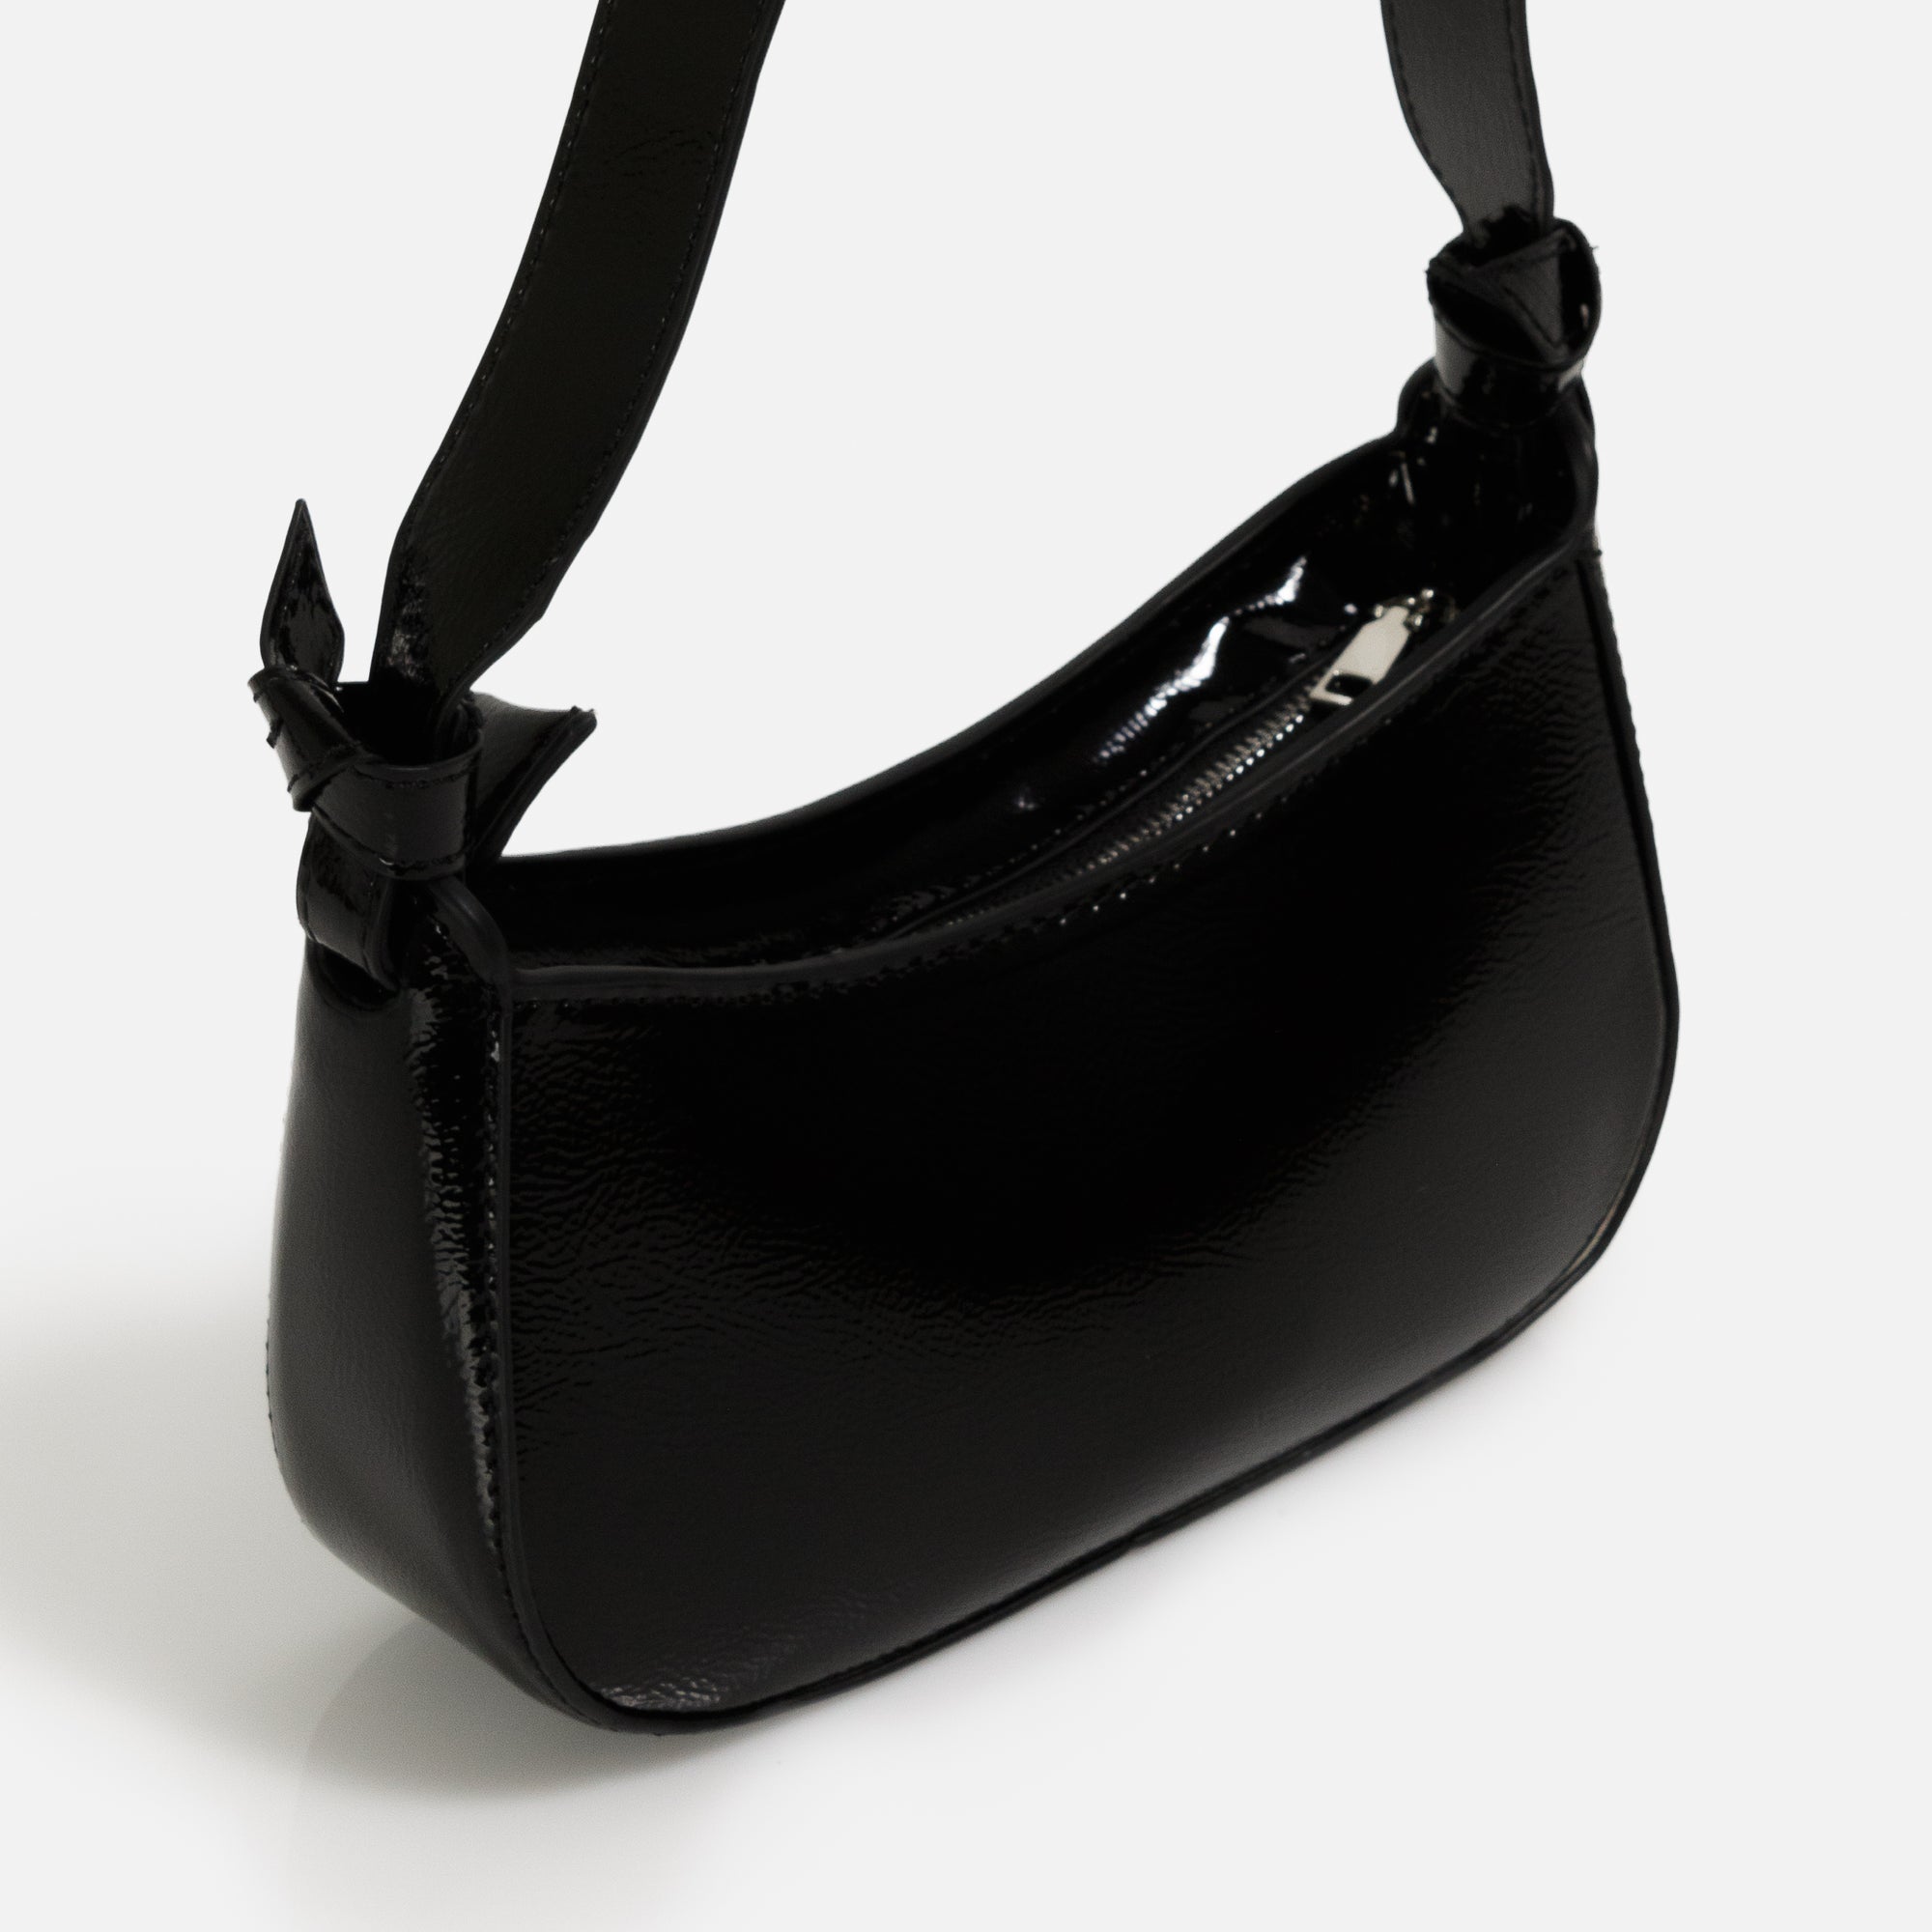 Black shoulder handbag with bows